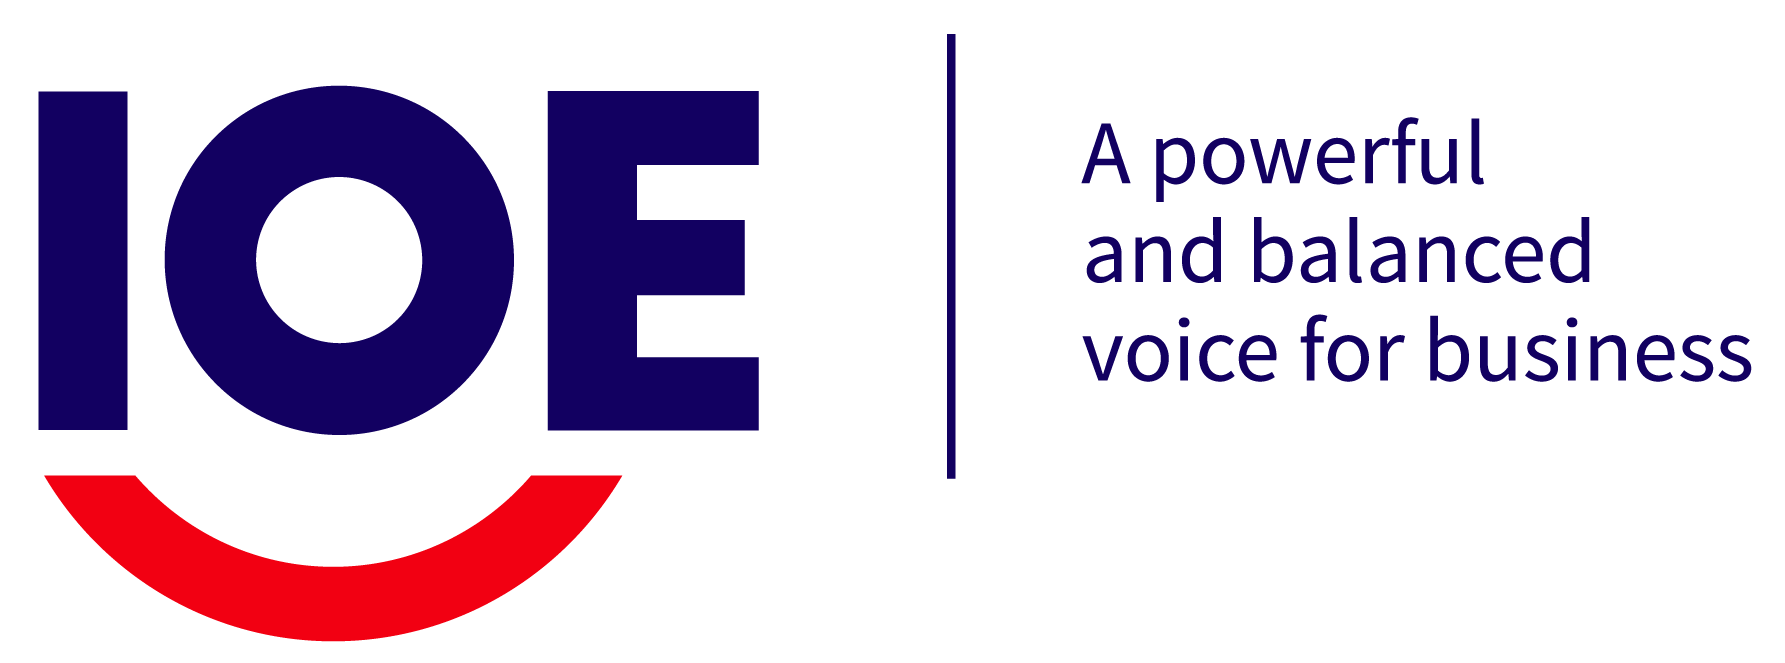 IOE logo